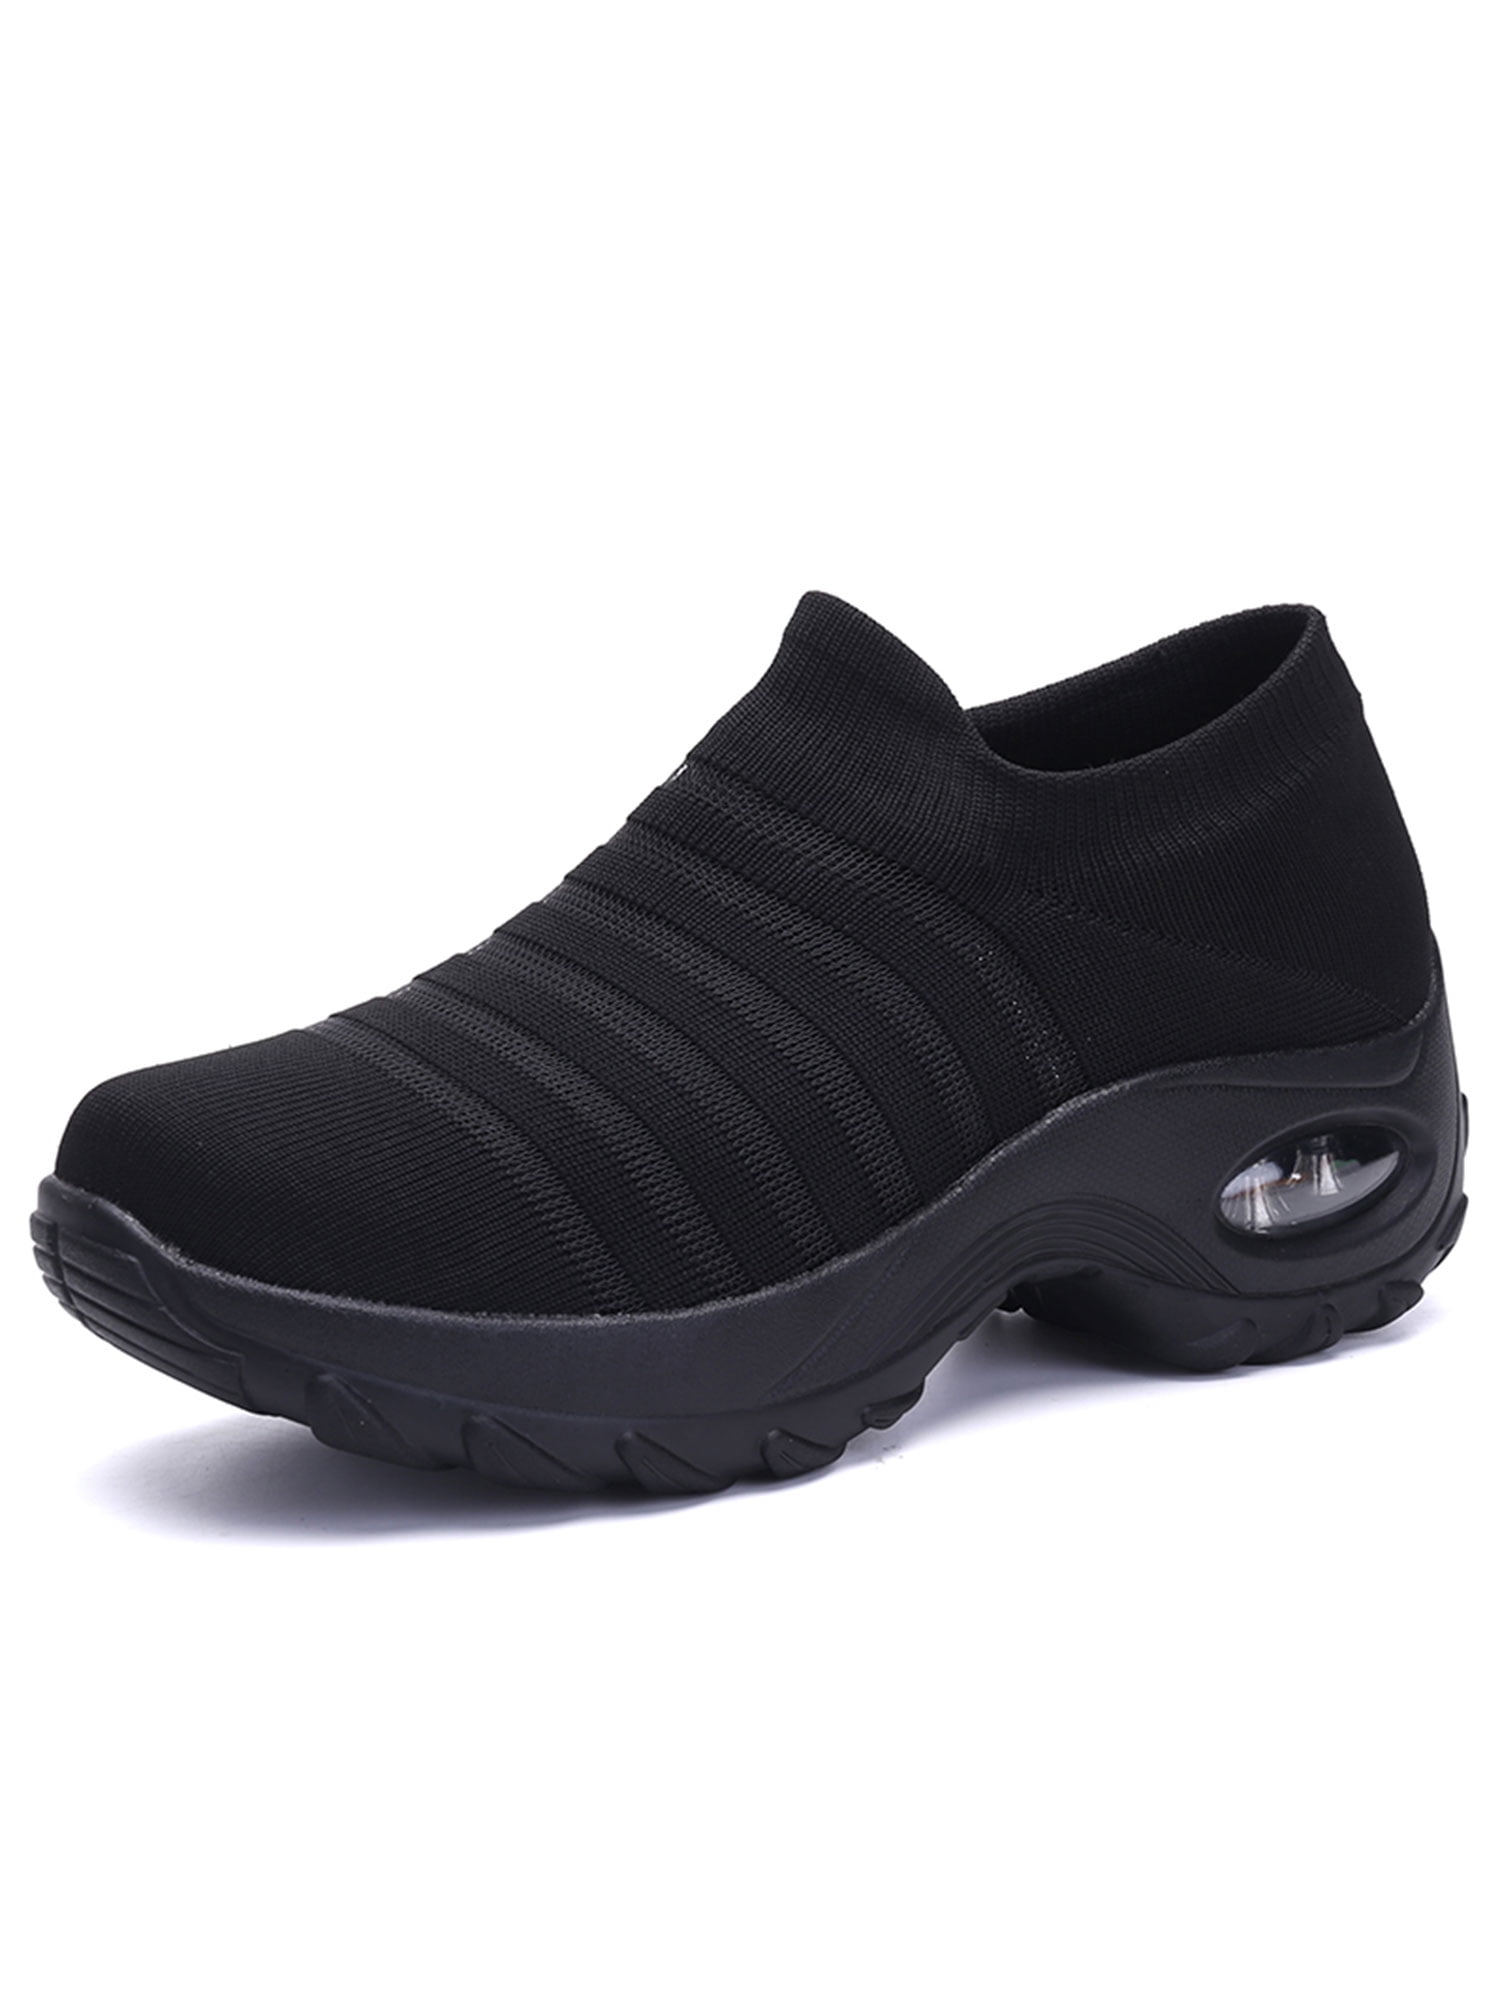 Own Shoe - Women's Walking Shoes Sock Sneakers - Mesh Slip On Air ...